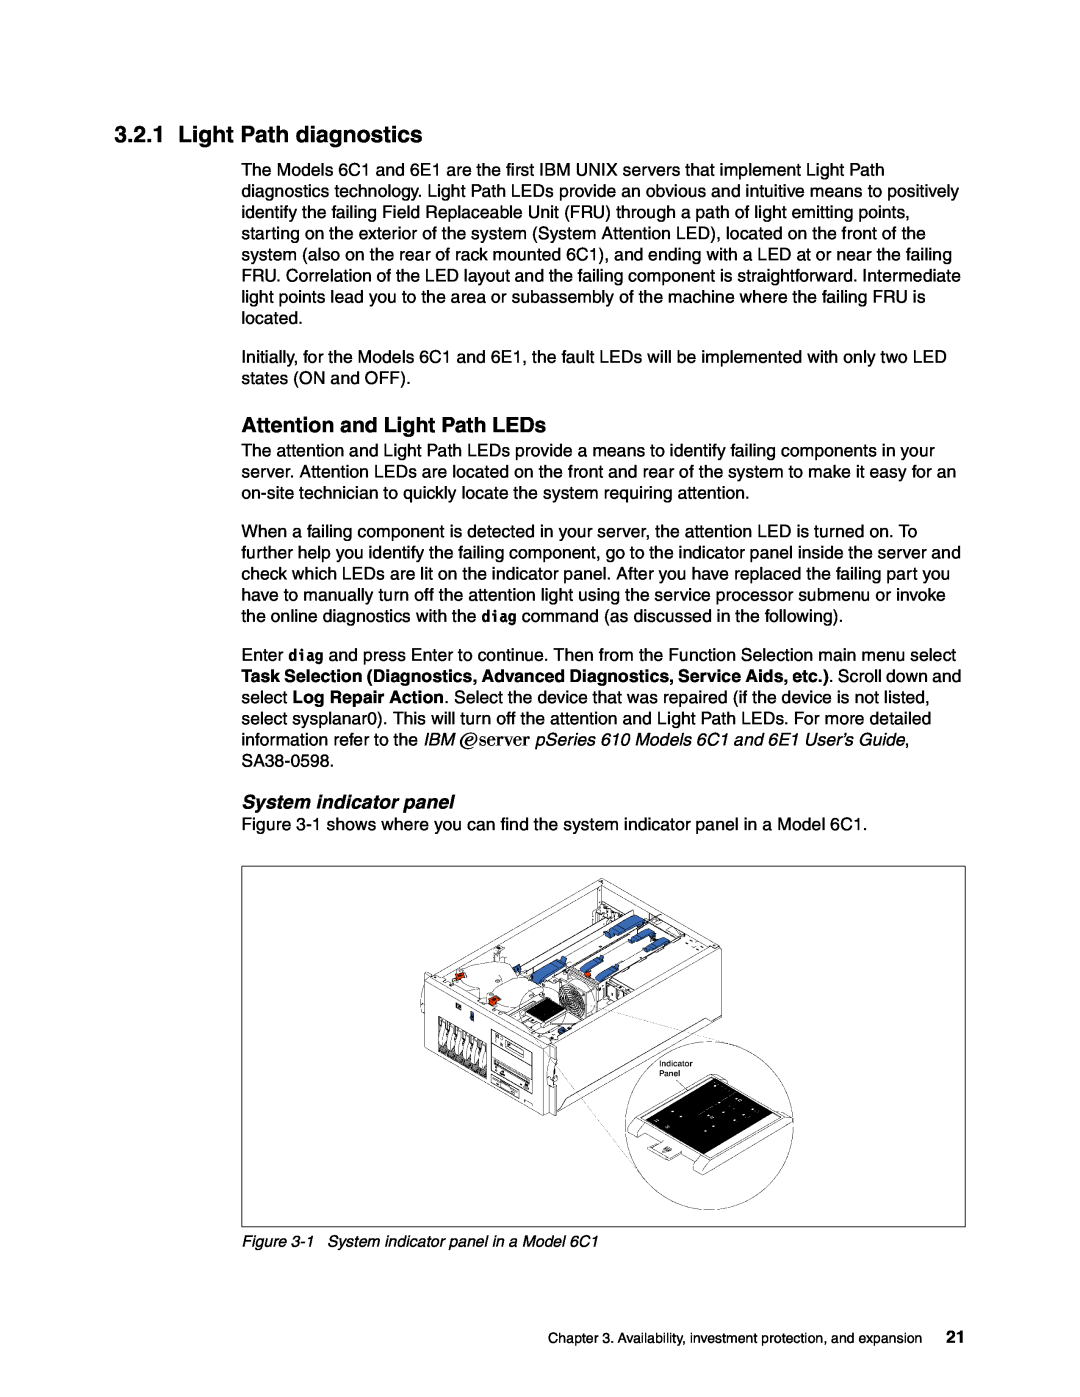 IBM 610, 6E1, 6C1 manual Light Path diagnostics, Attention and Light Path LEDs, System indicator panel 